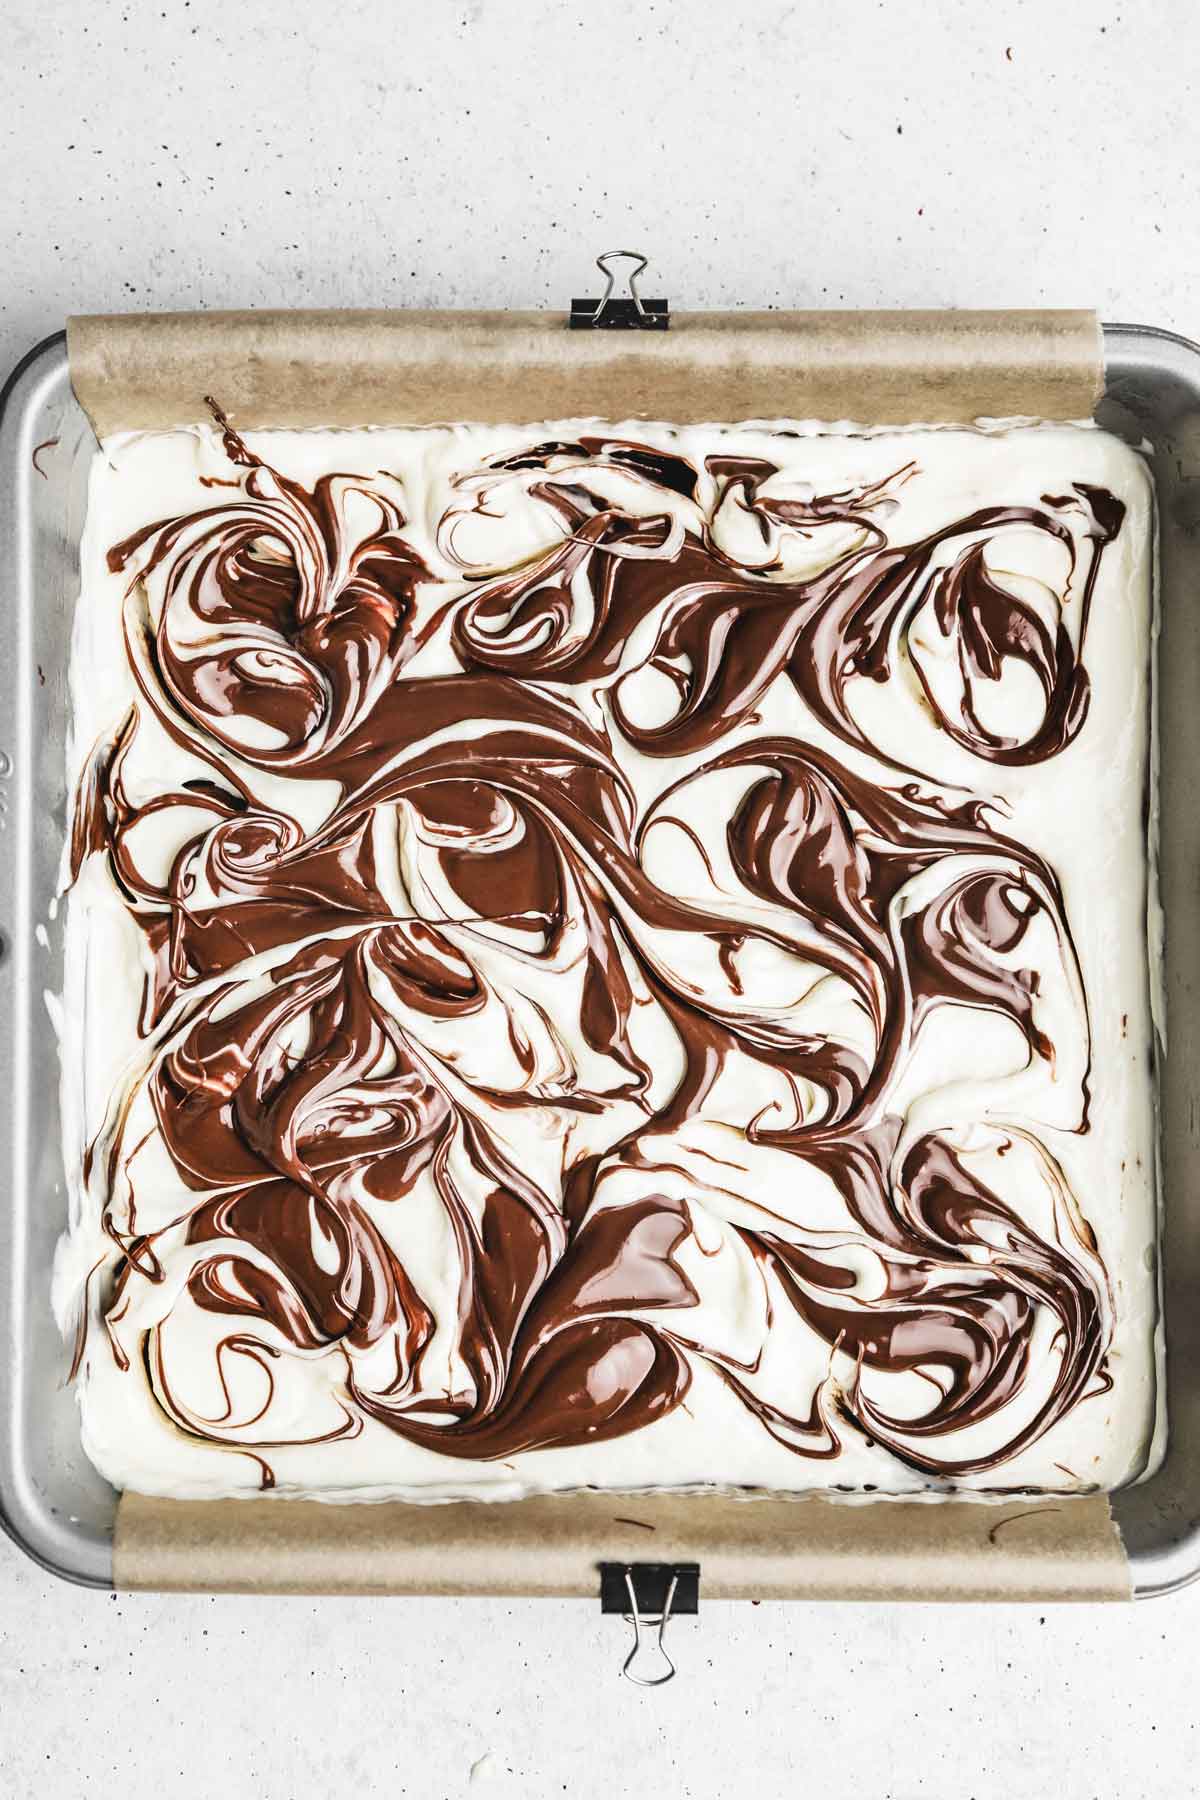 square cake pan with swirled nutella cream cheese mixture